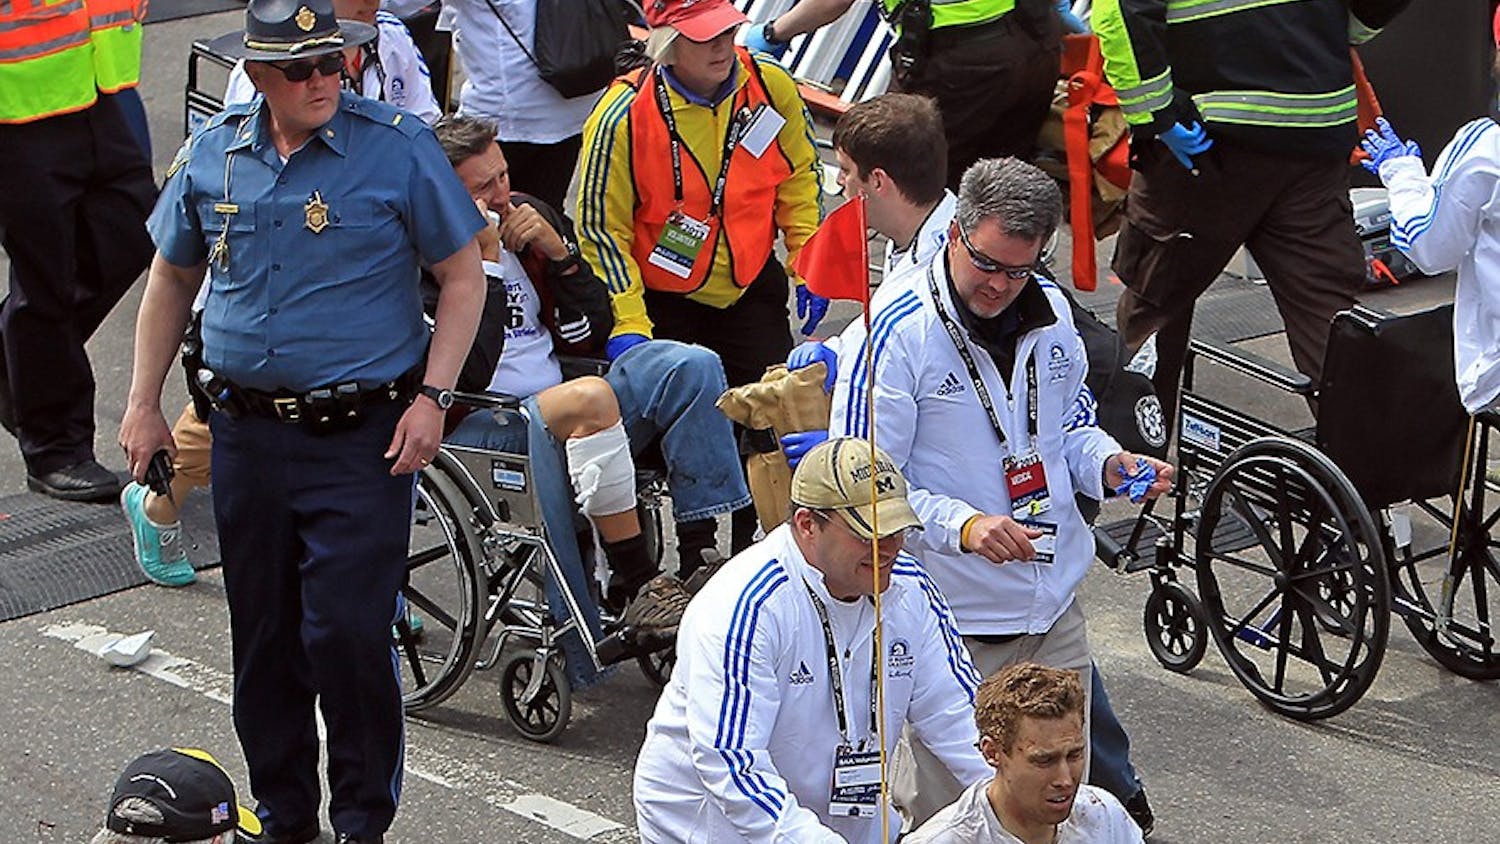 Victims of the bomb blast during the Boston Marathon are assisted in Boston, Massachusetts, Monday, April 15, 2013. (Stuart Cahill/Boston Herald/MCT)